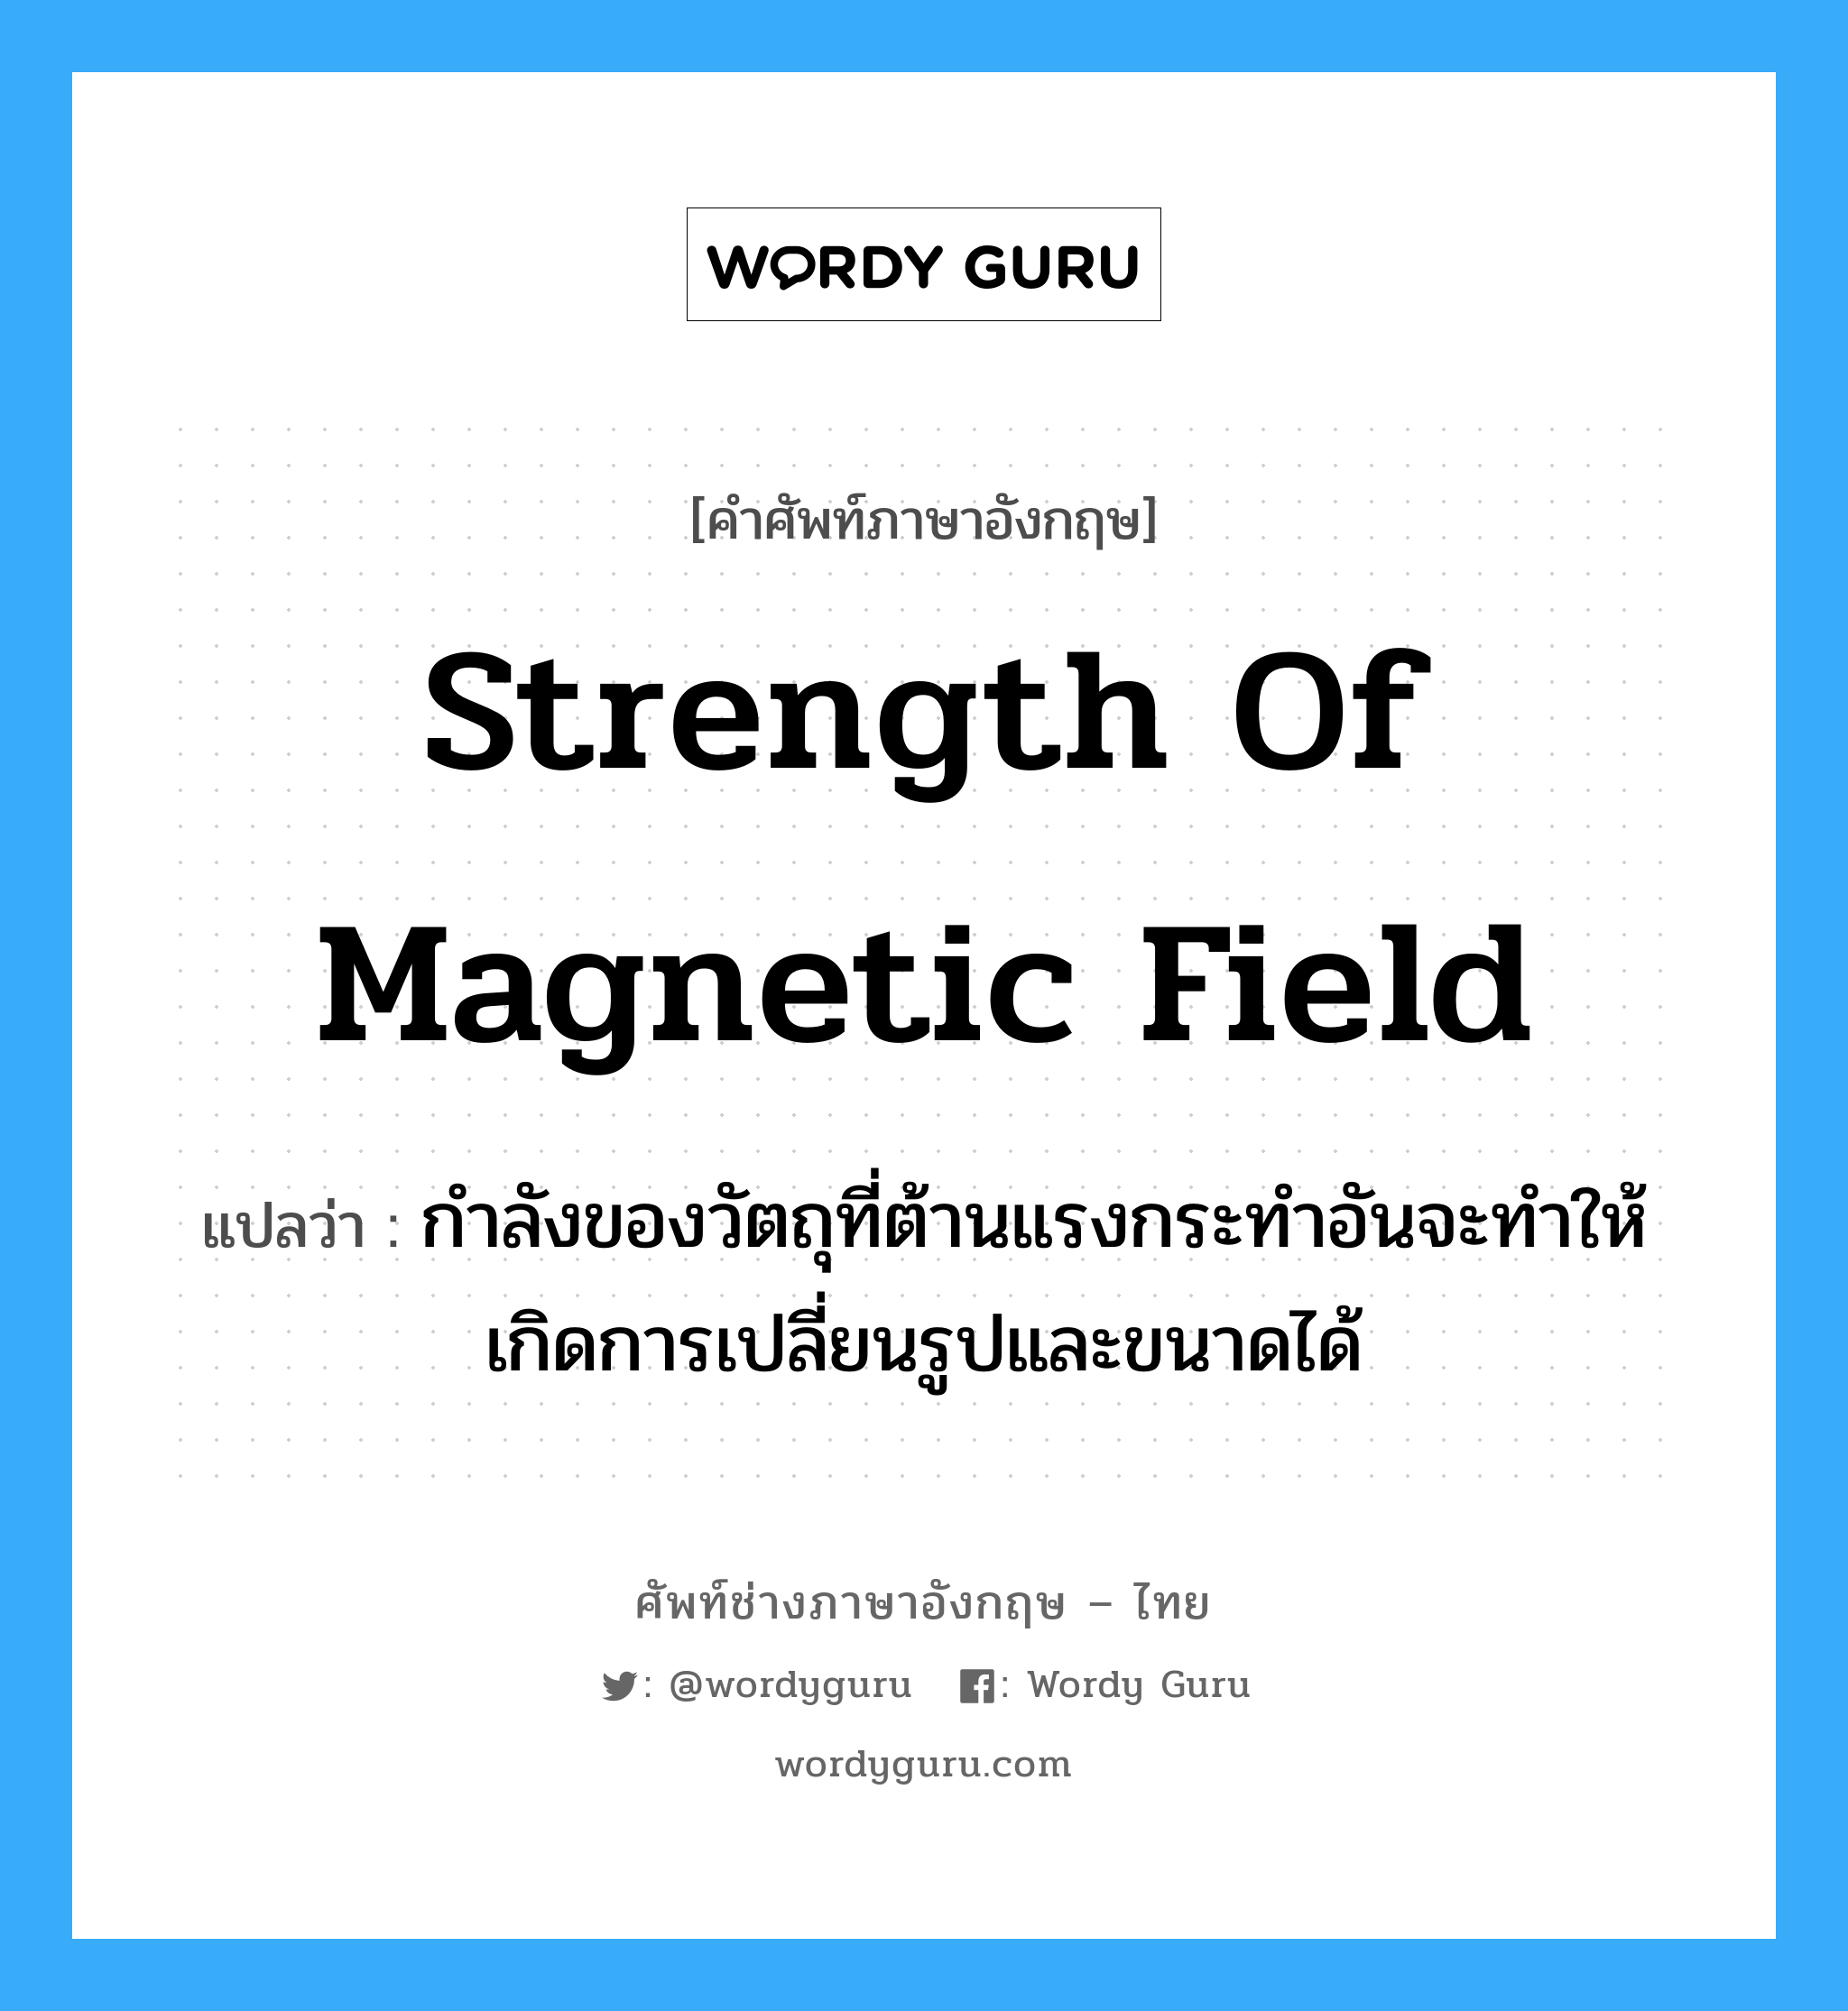 strength of magnetic field แปลว่า?, คำศัพท์ช่างภาษาอังกฤษ - ไทย strength of magnetic field คำศัพท์ภาษาอังกฤษ strength of magnetic field แปลว่า กำลังของวัตถุที่ต้านแรงกระทำอันจะทำให้เกิดการเปลี่ยนรูปและขนาดได้